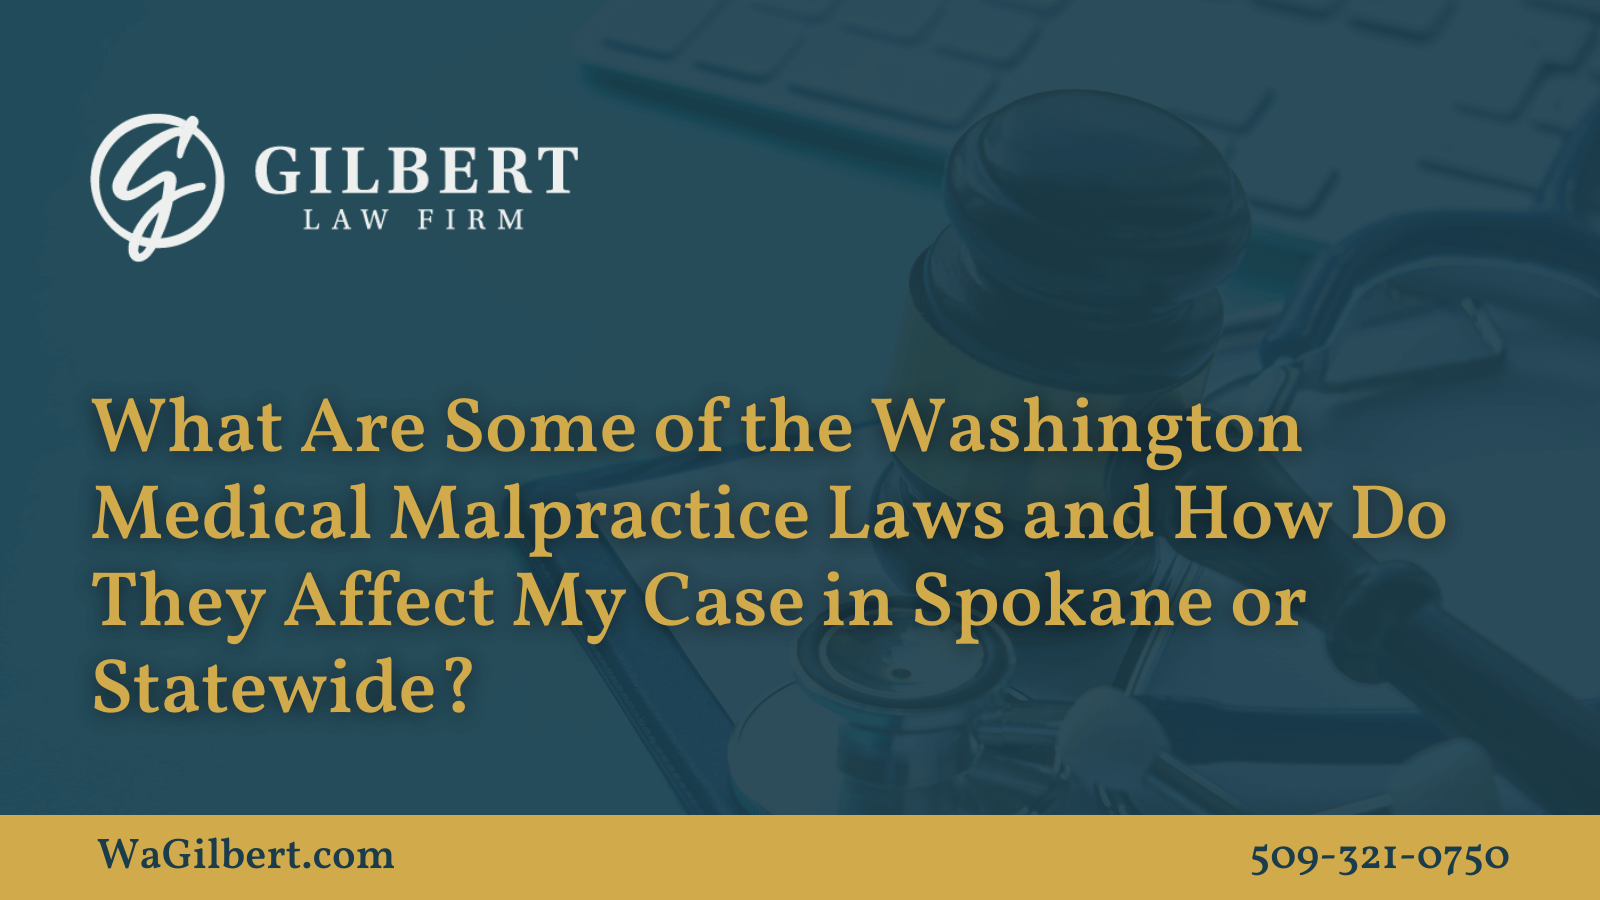 Washington medical malpractice laws | Gilbert Law Firm Spokane Washington